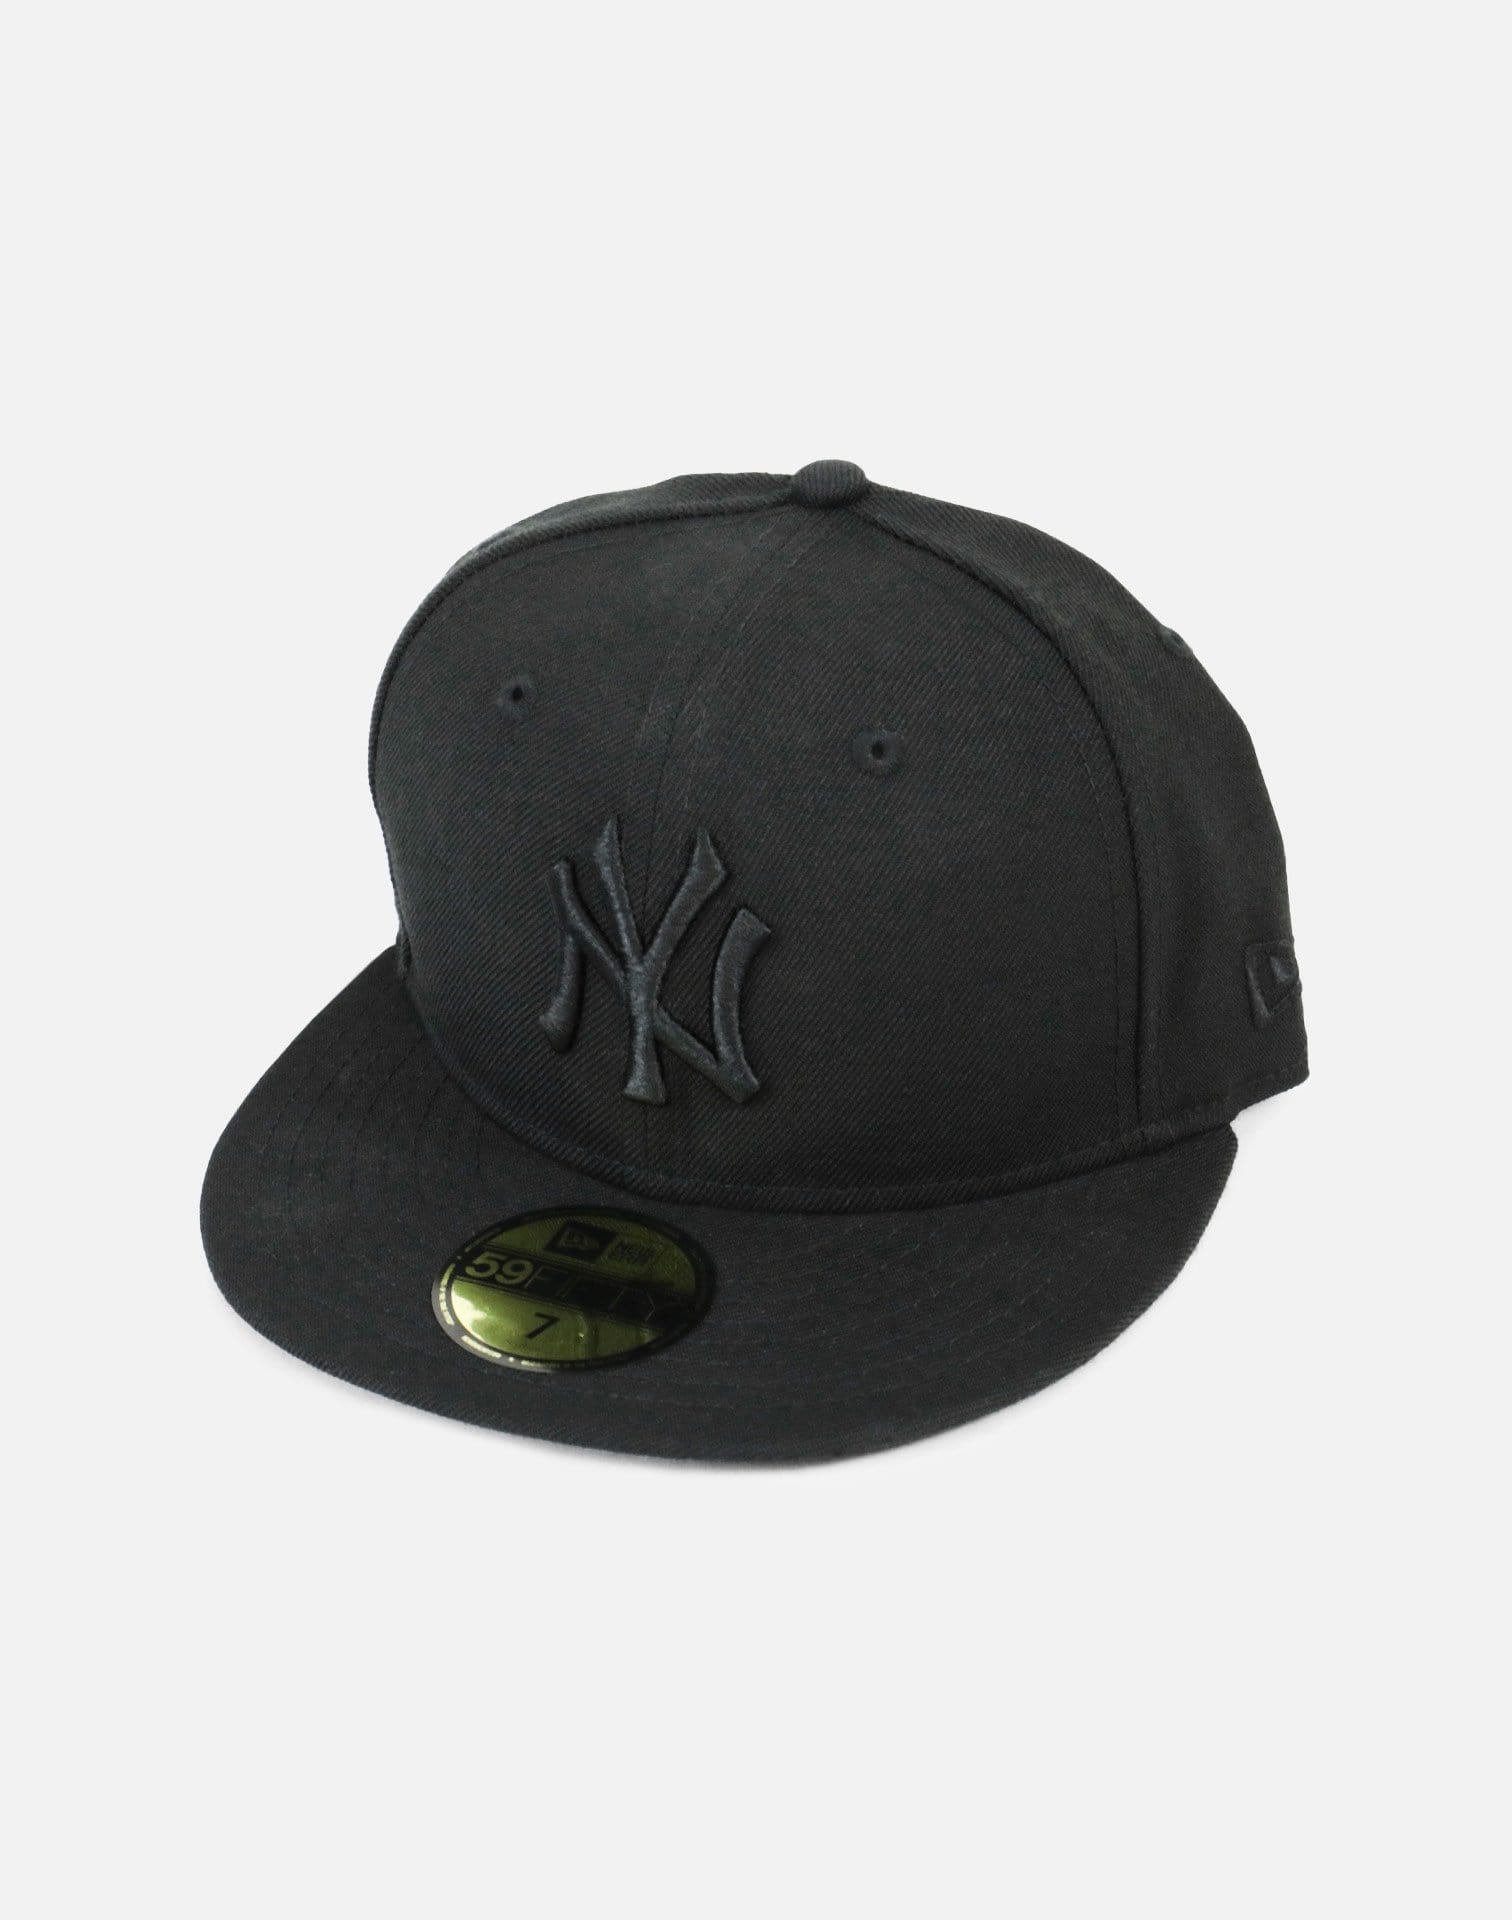 New Era NEW YORK YANKEES BLACK FITTED HAT